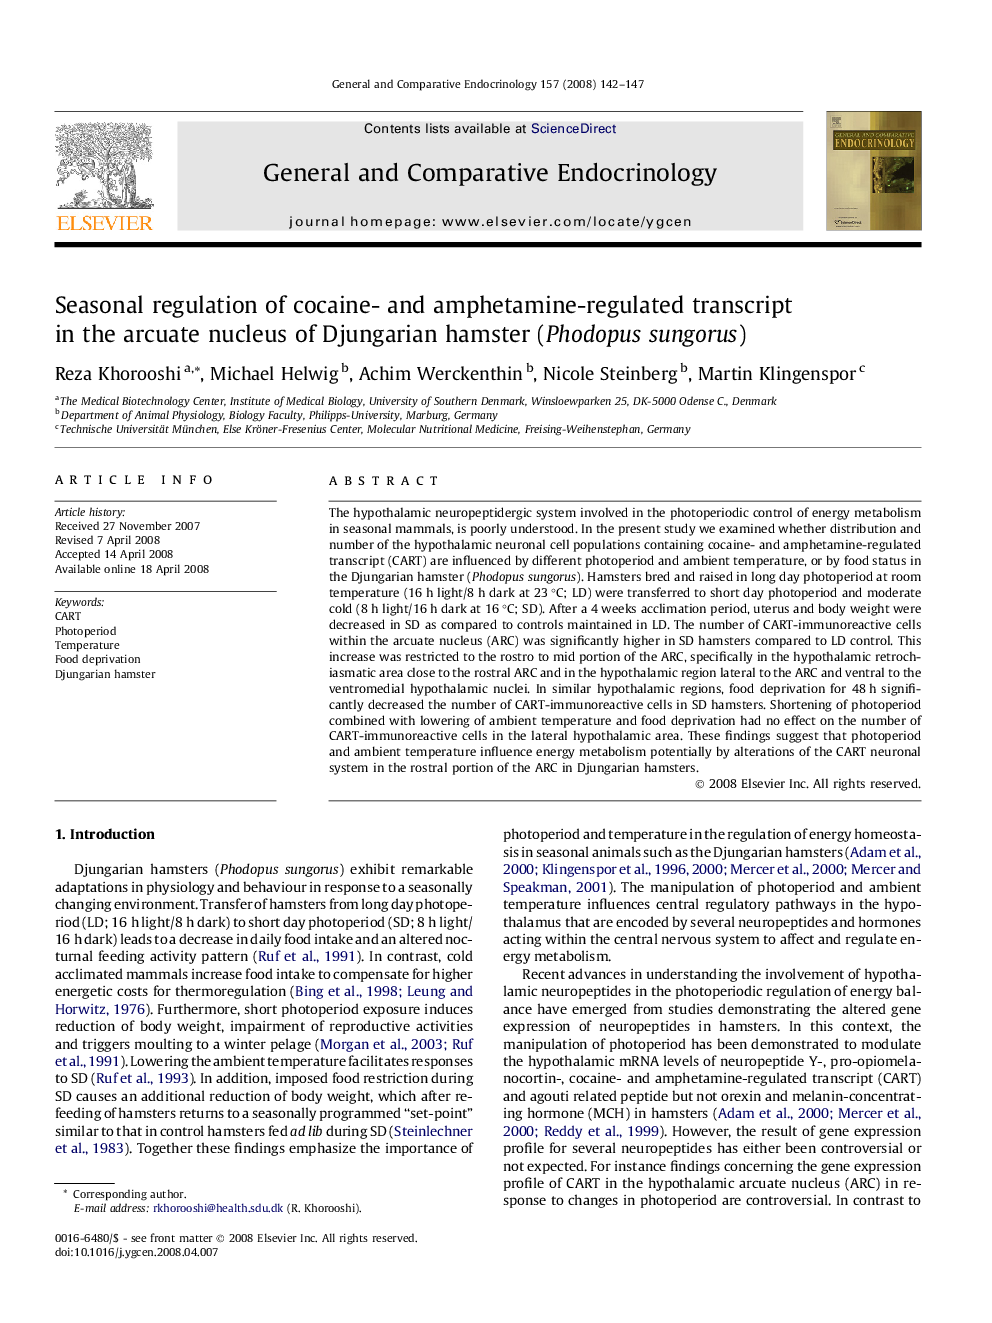 Seasonal regulation of cocaine- and amphetamine-regulated transcript in the arcuate nucleus of Djungarian hamster (Phodopus sungorus)